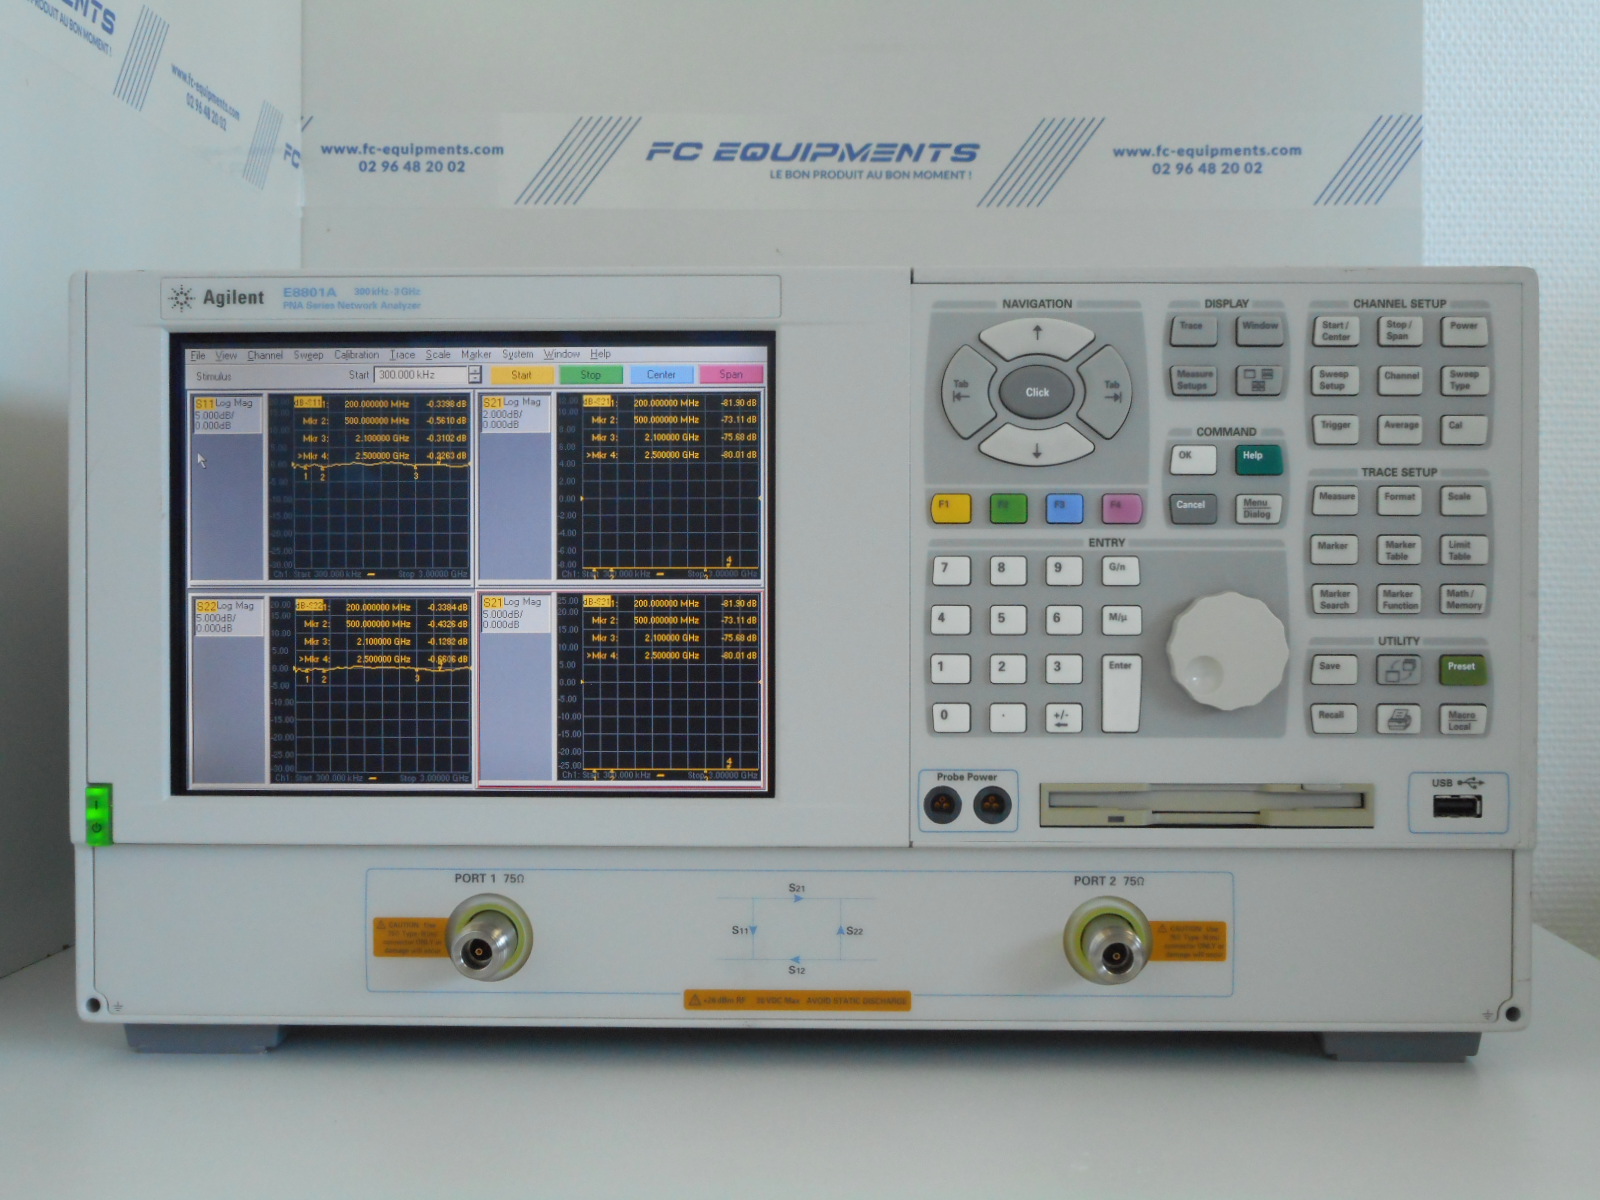 E8801a - analyseur de reseau pna - keysight technologies (agilent / hp) - 300khz - 3ghz   75ohms.- analyseurs de signaux vectoriels_0